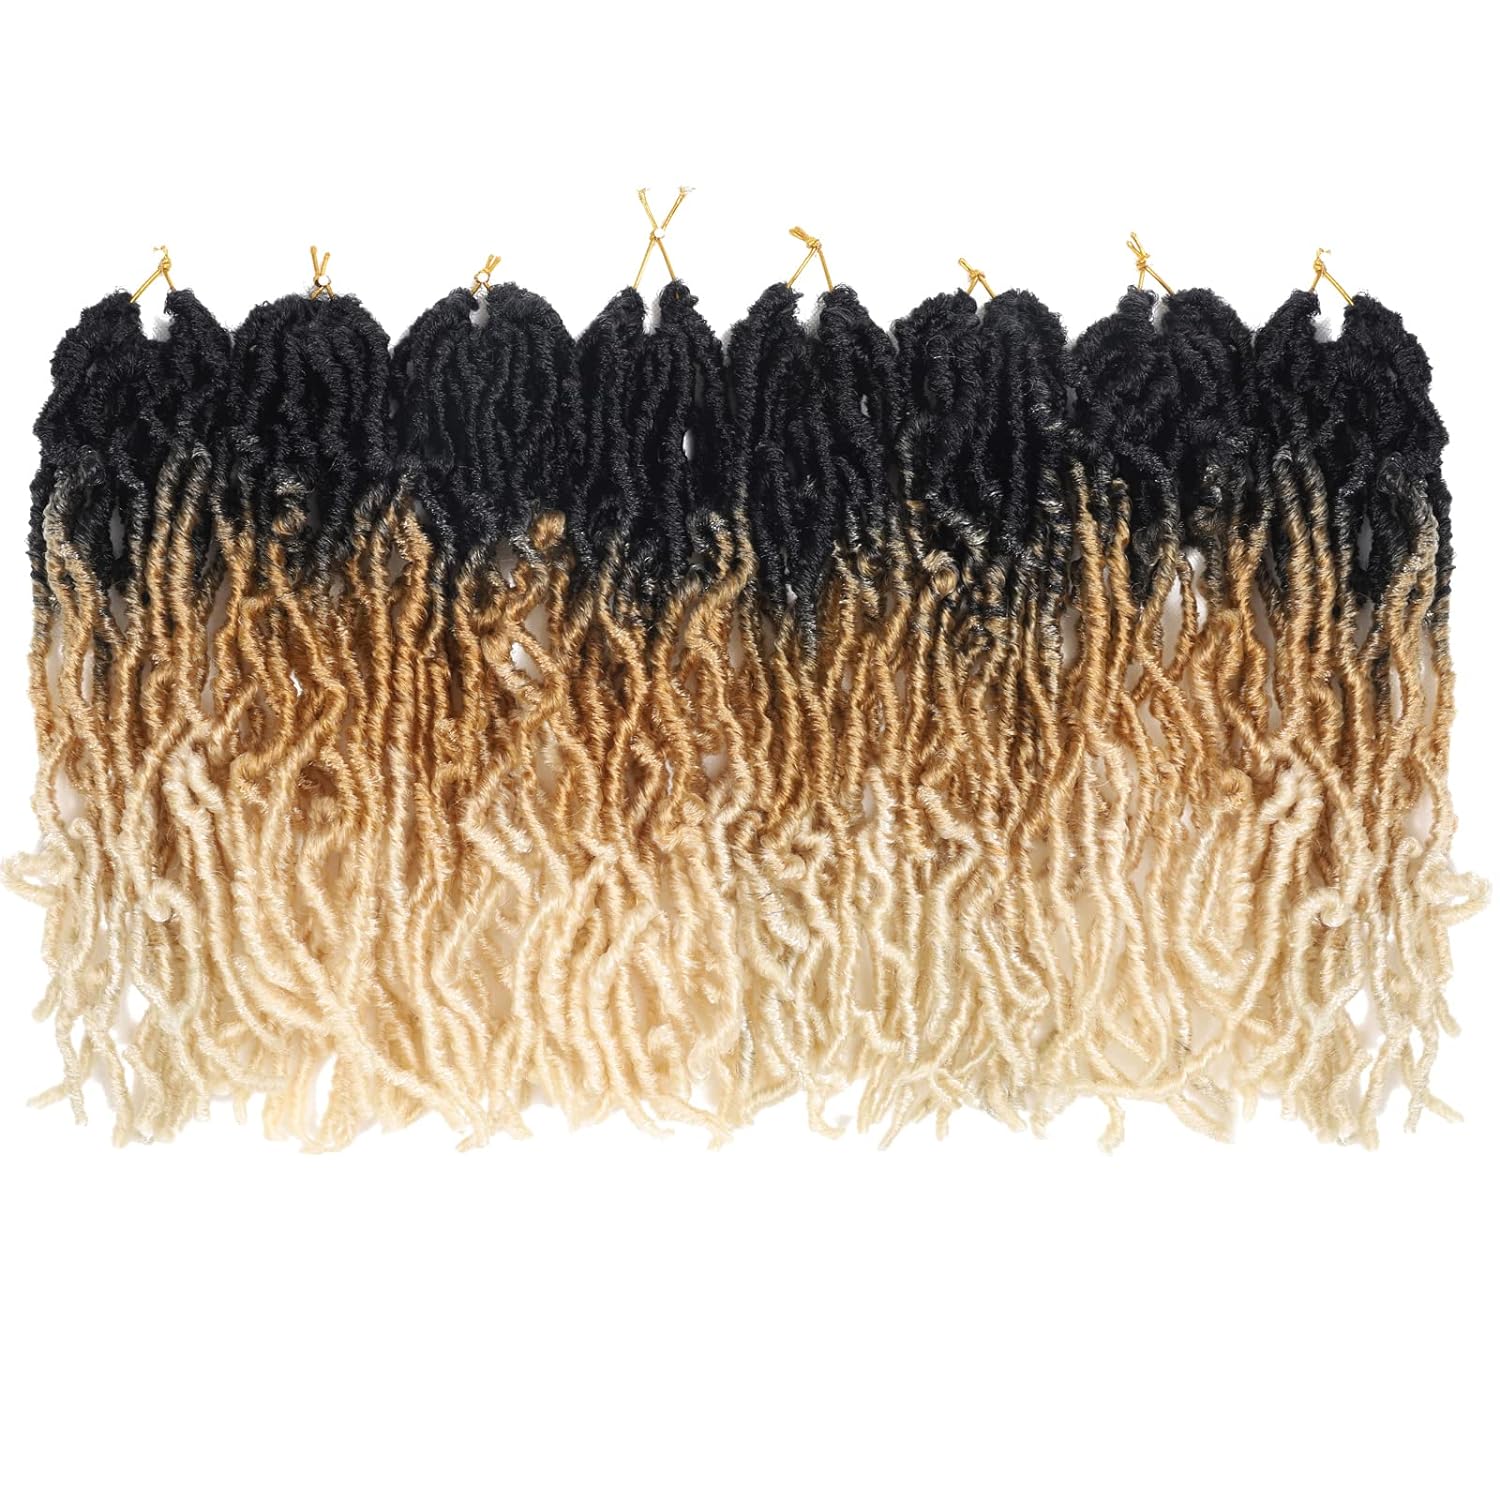 8 Packs Short Faux Locs Crochet Hair 120 Strands 12Inch Soft Locs Wavy Dreadlocks Crochet Braids Natural Pre-Looped Crochet Hair for Black Women (12 Inch (Pack of 8), 1B)